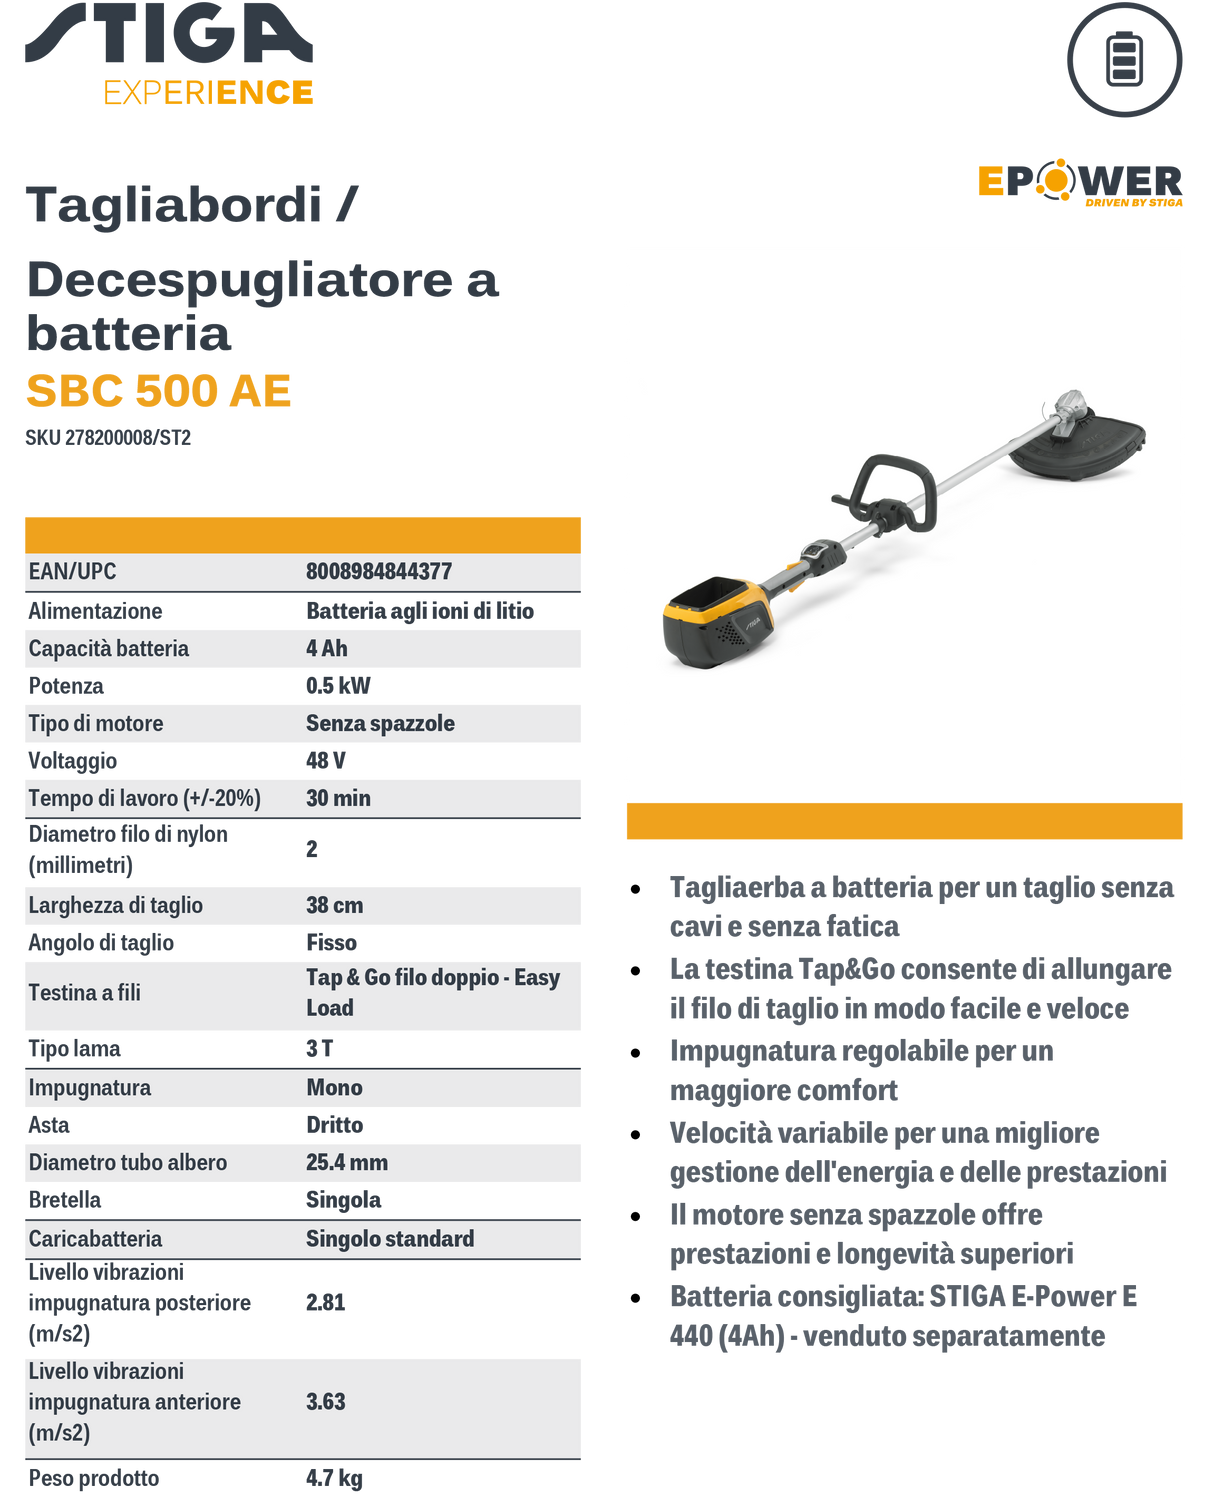 SBC 500 AE cordless brushcutter